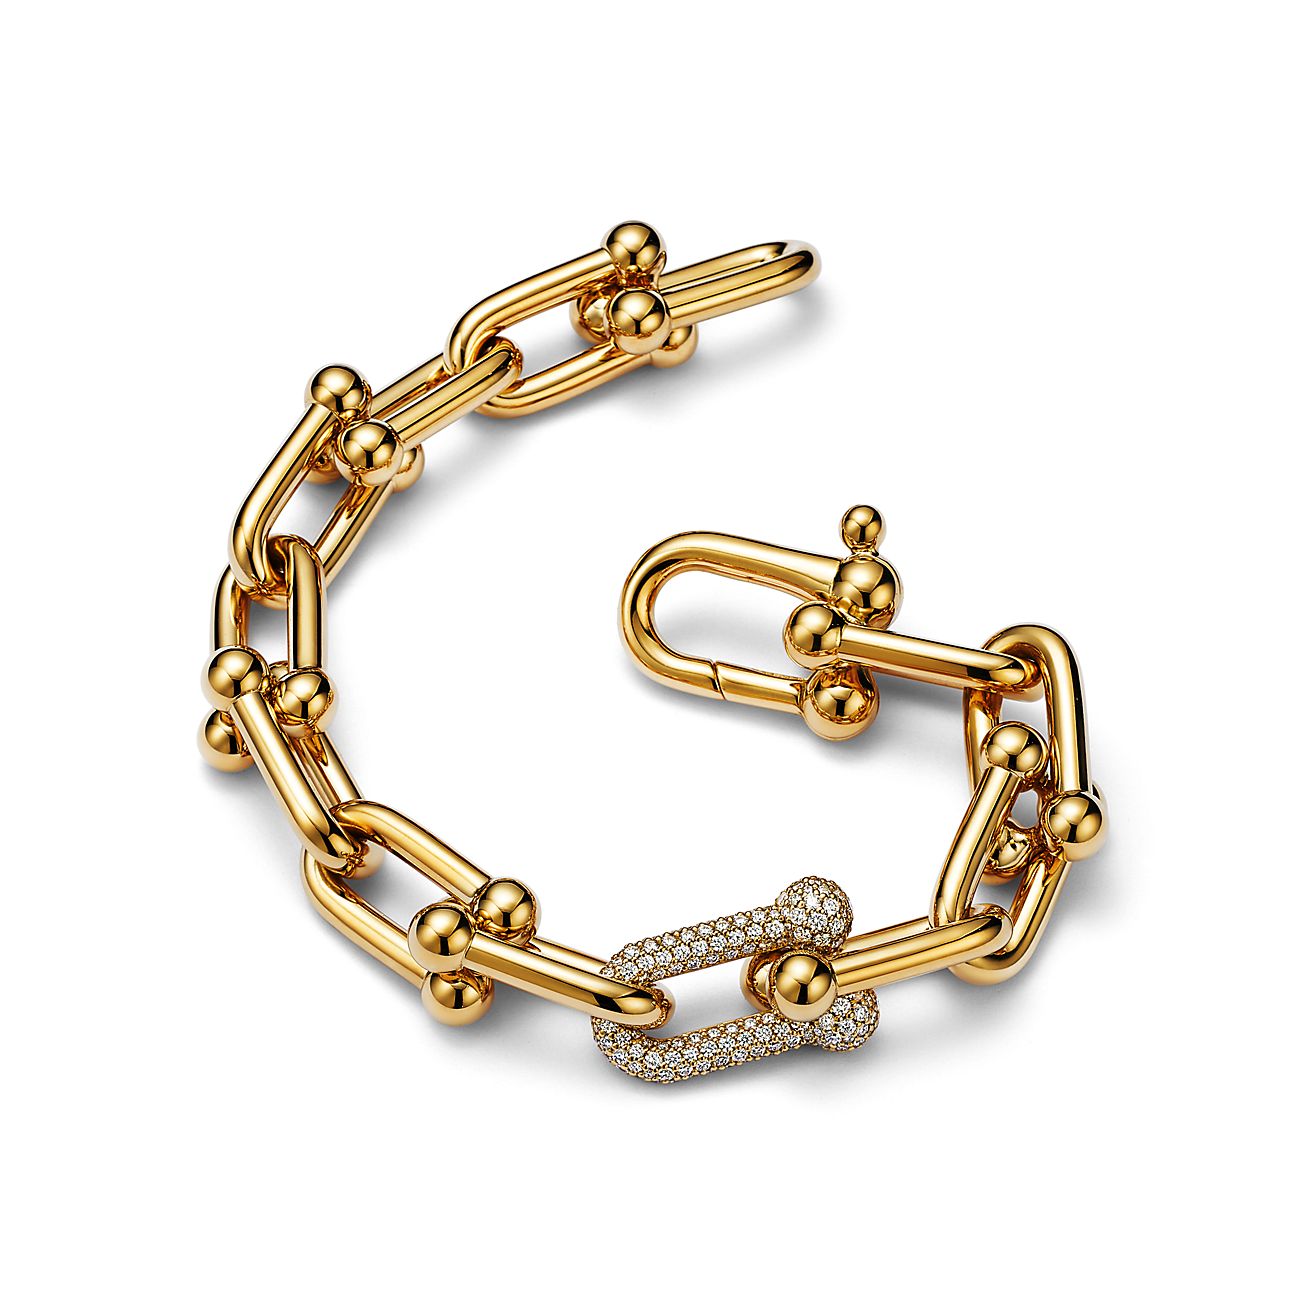 Details more than 69 tiffany hardwear bracelet best